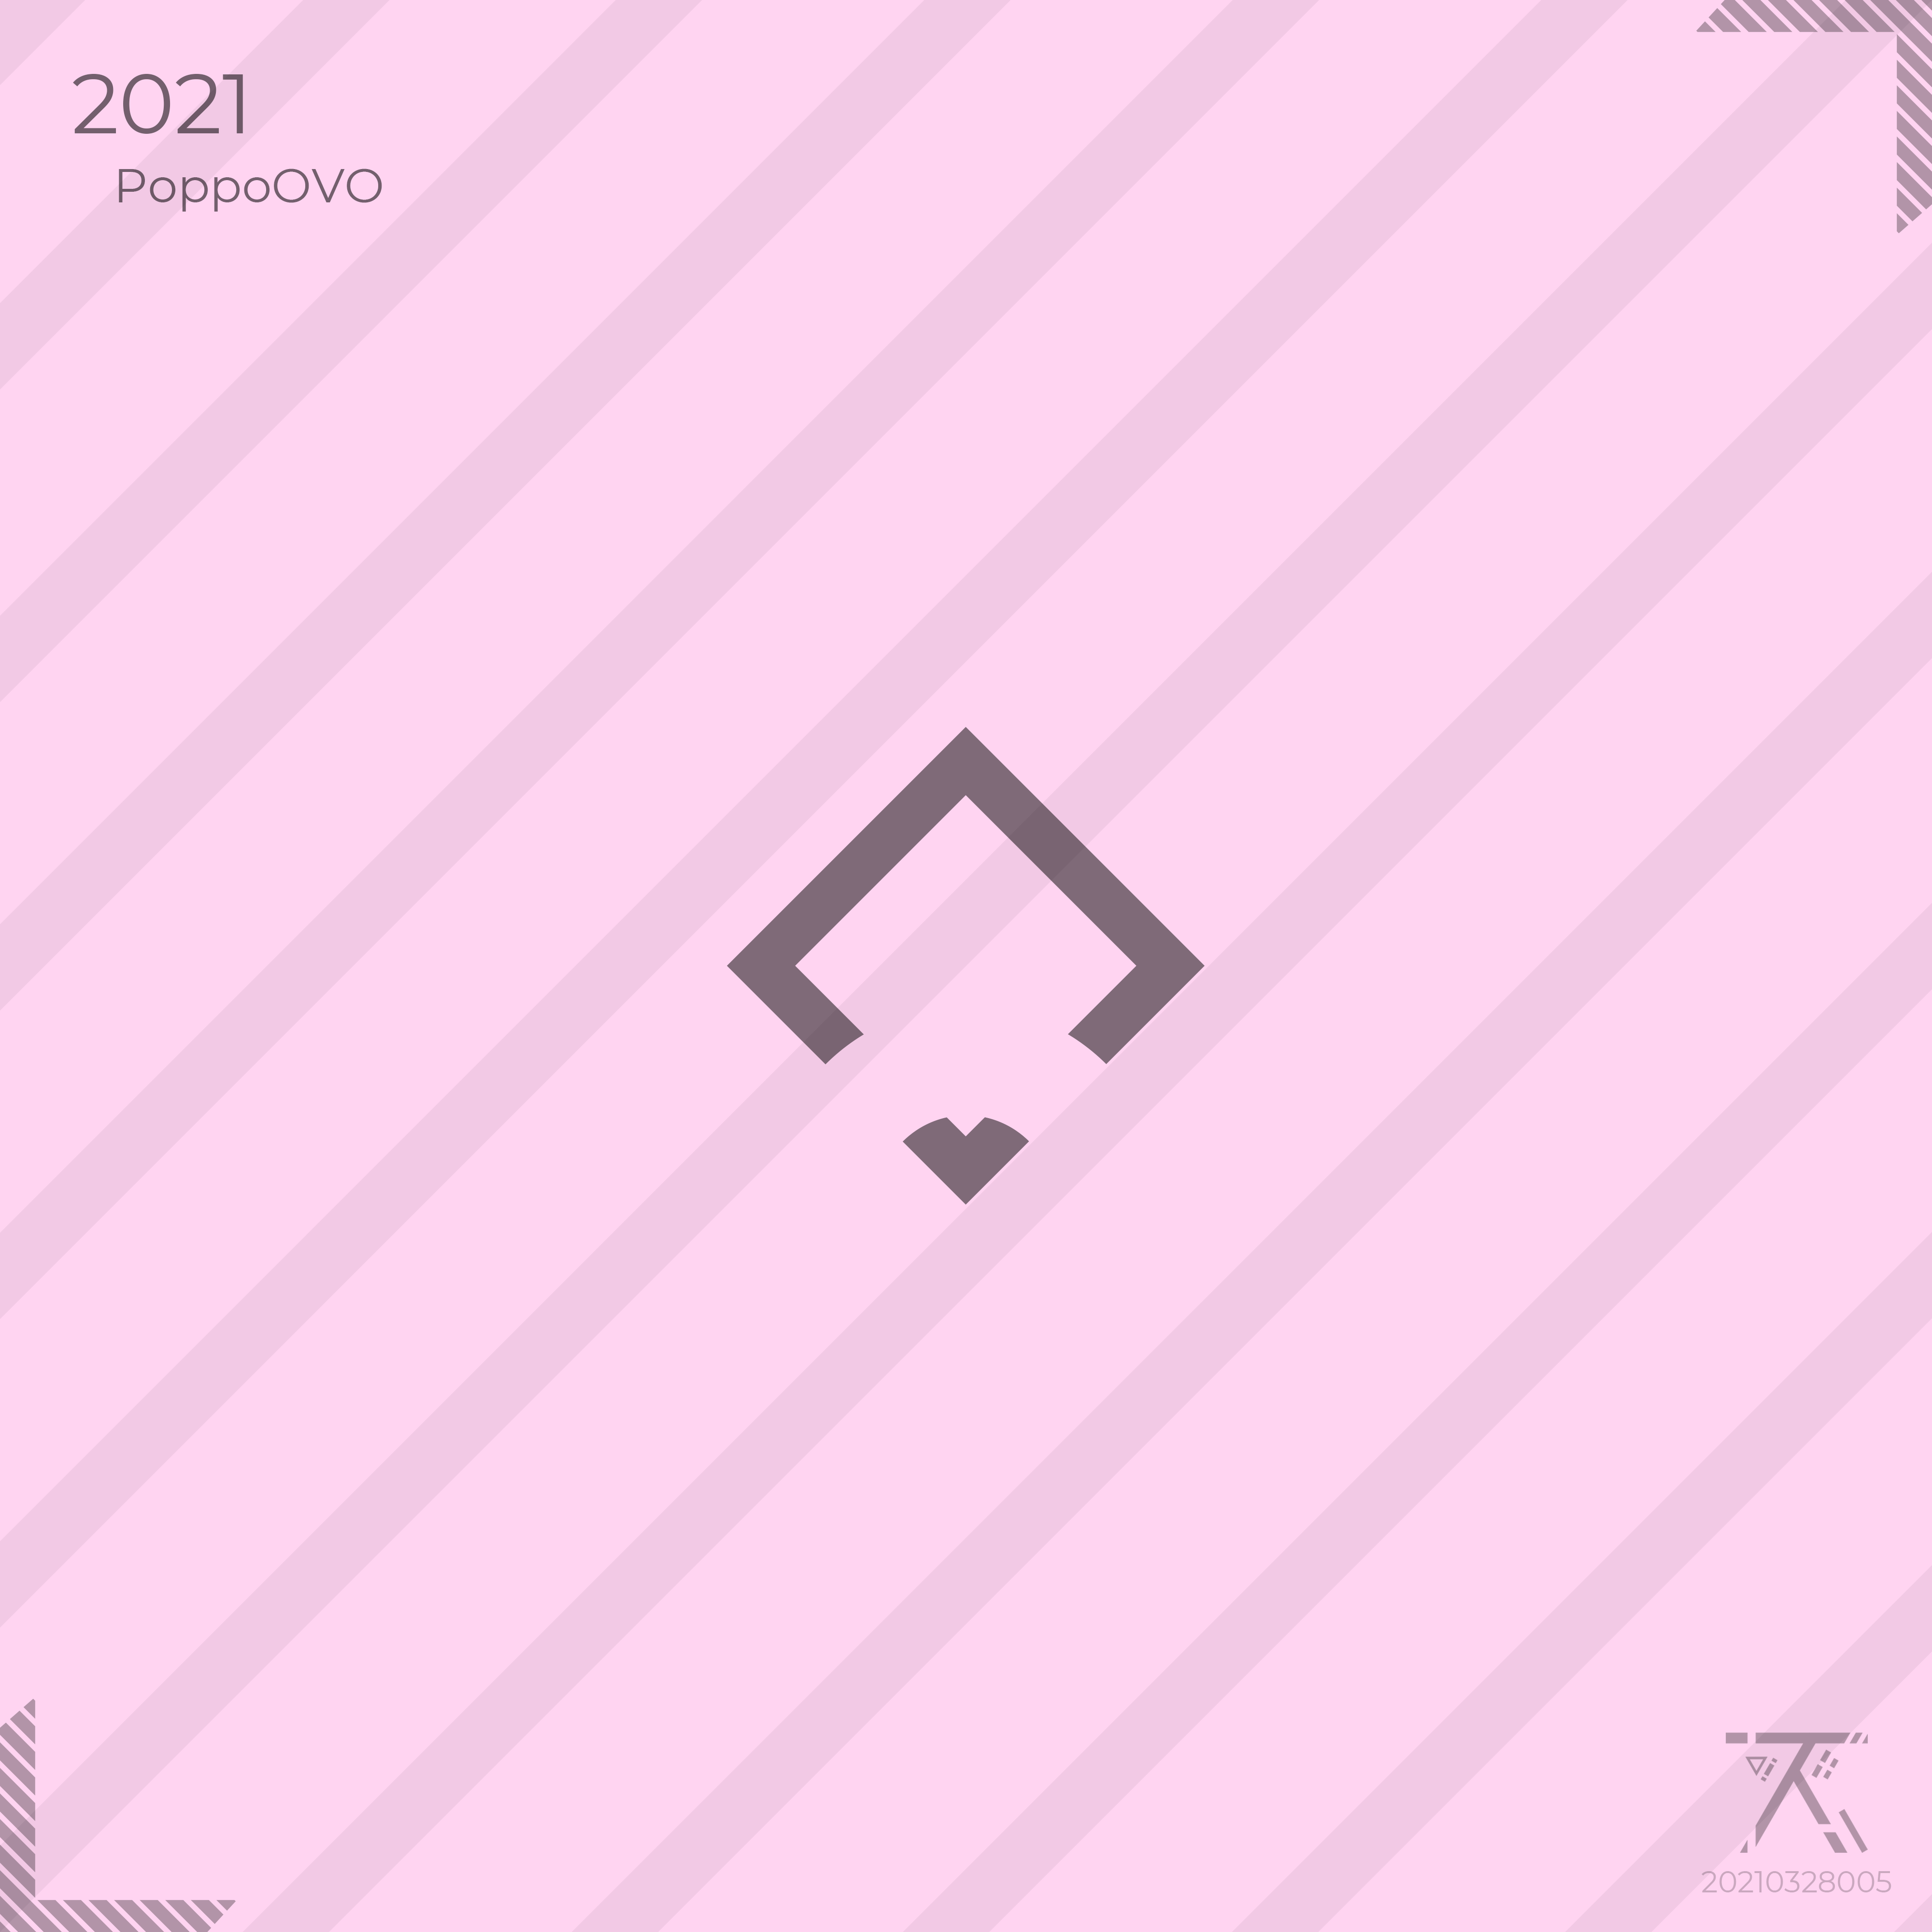 PoppoOVO - 2021